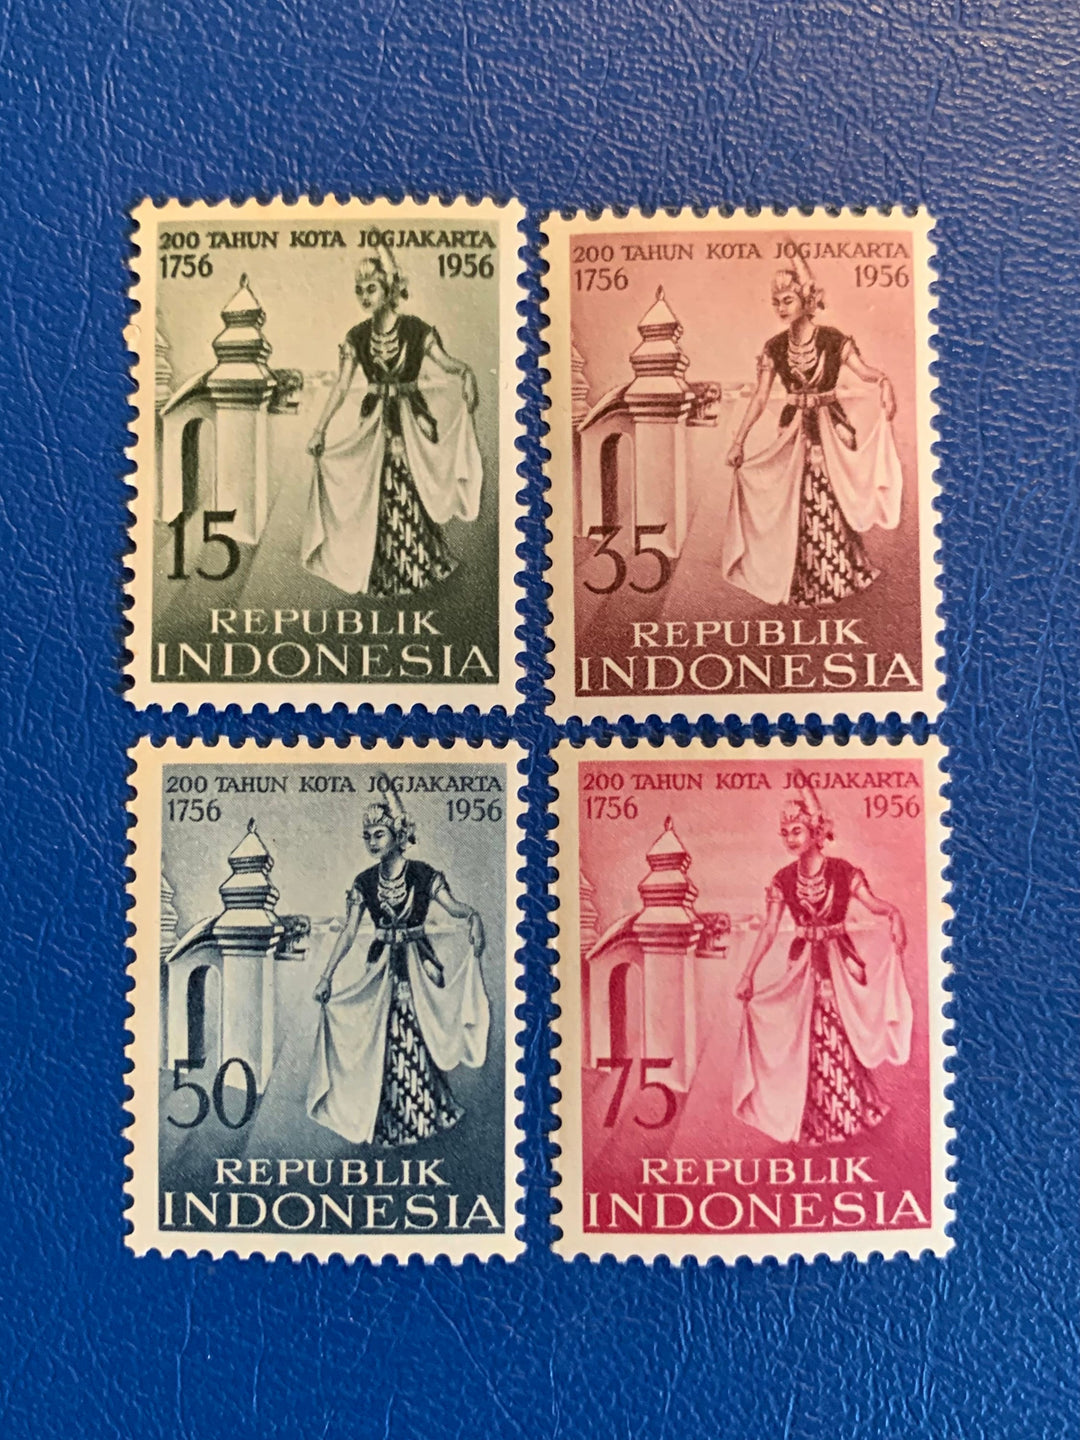 Thailand - Original Vintage Postage Stamps- 1956 Yogyakarta